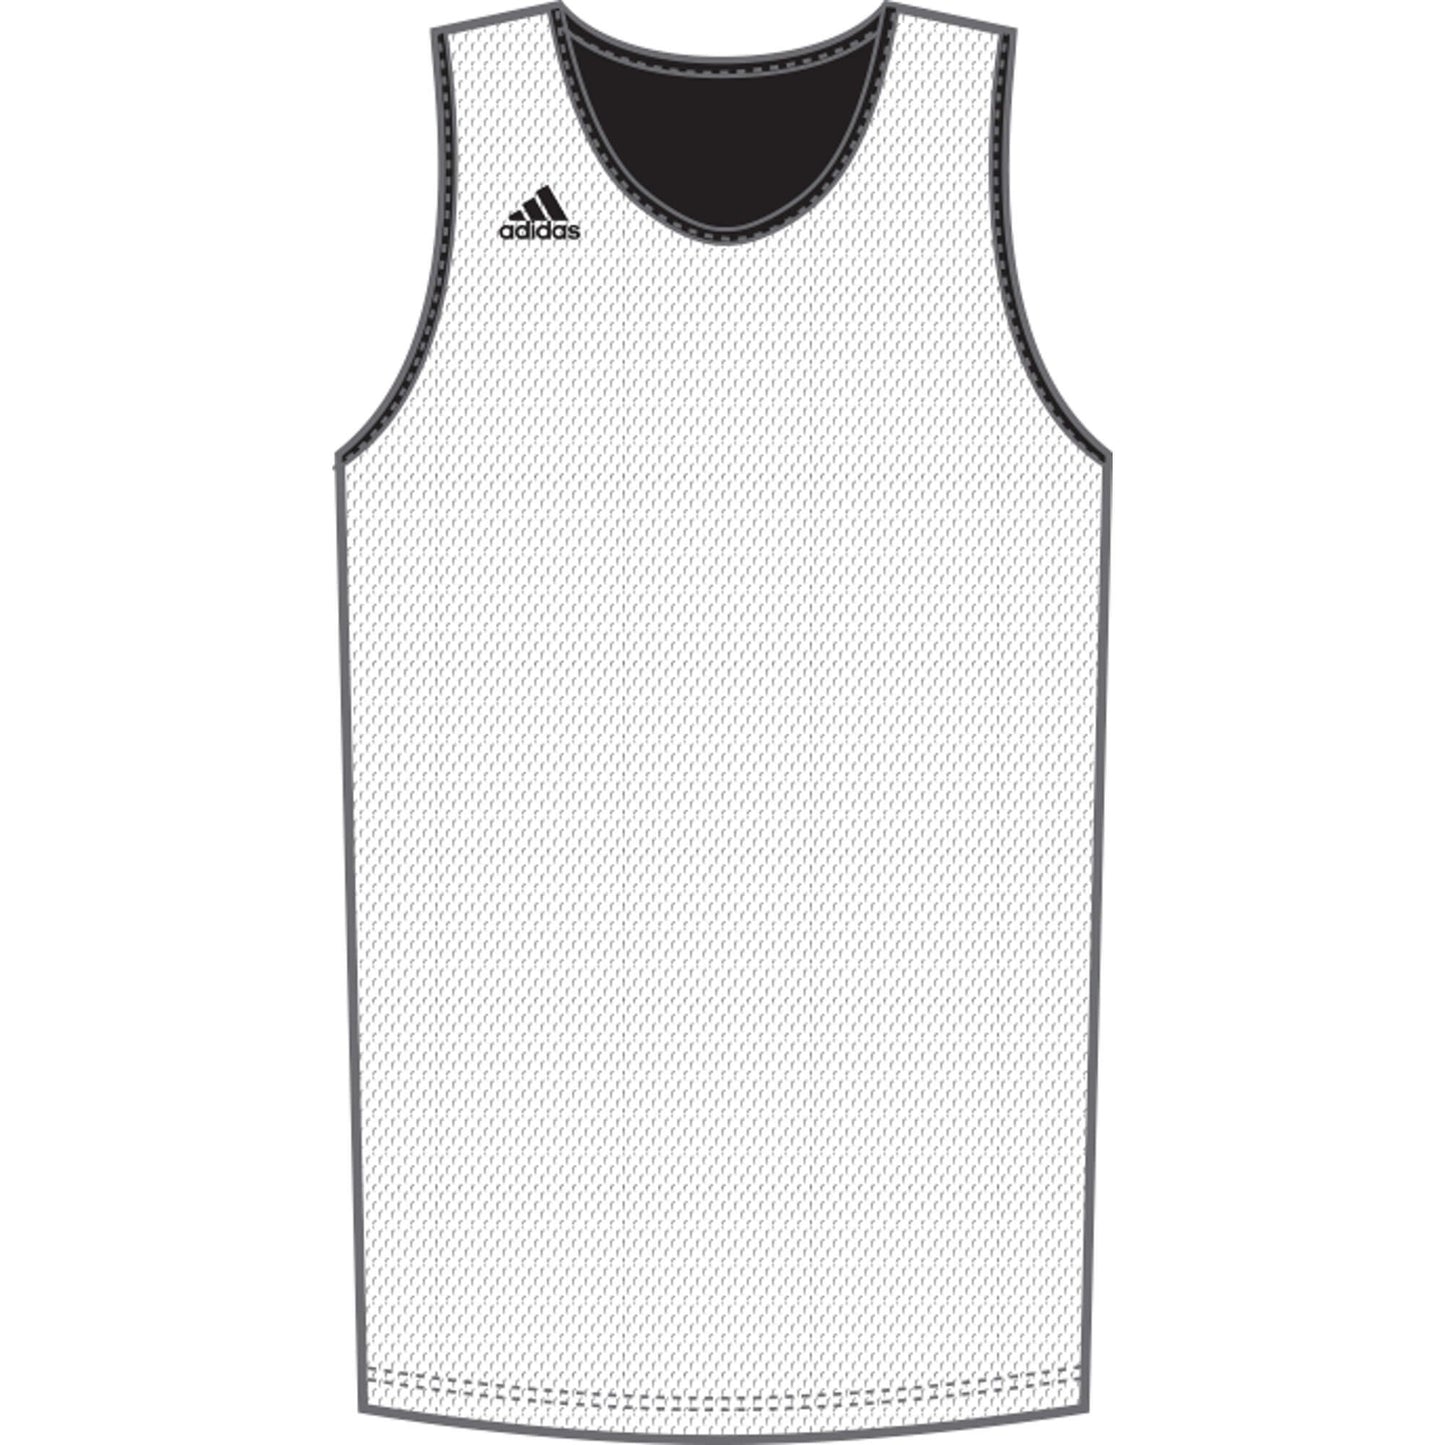 Adidas Basketball Shirt Practice Reversible